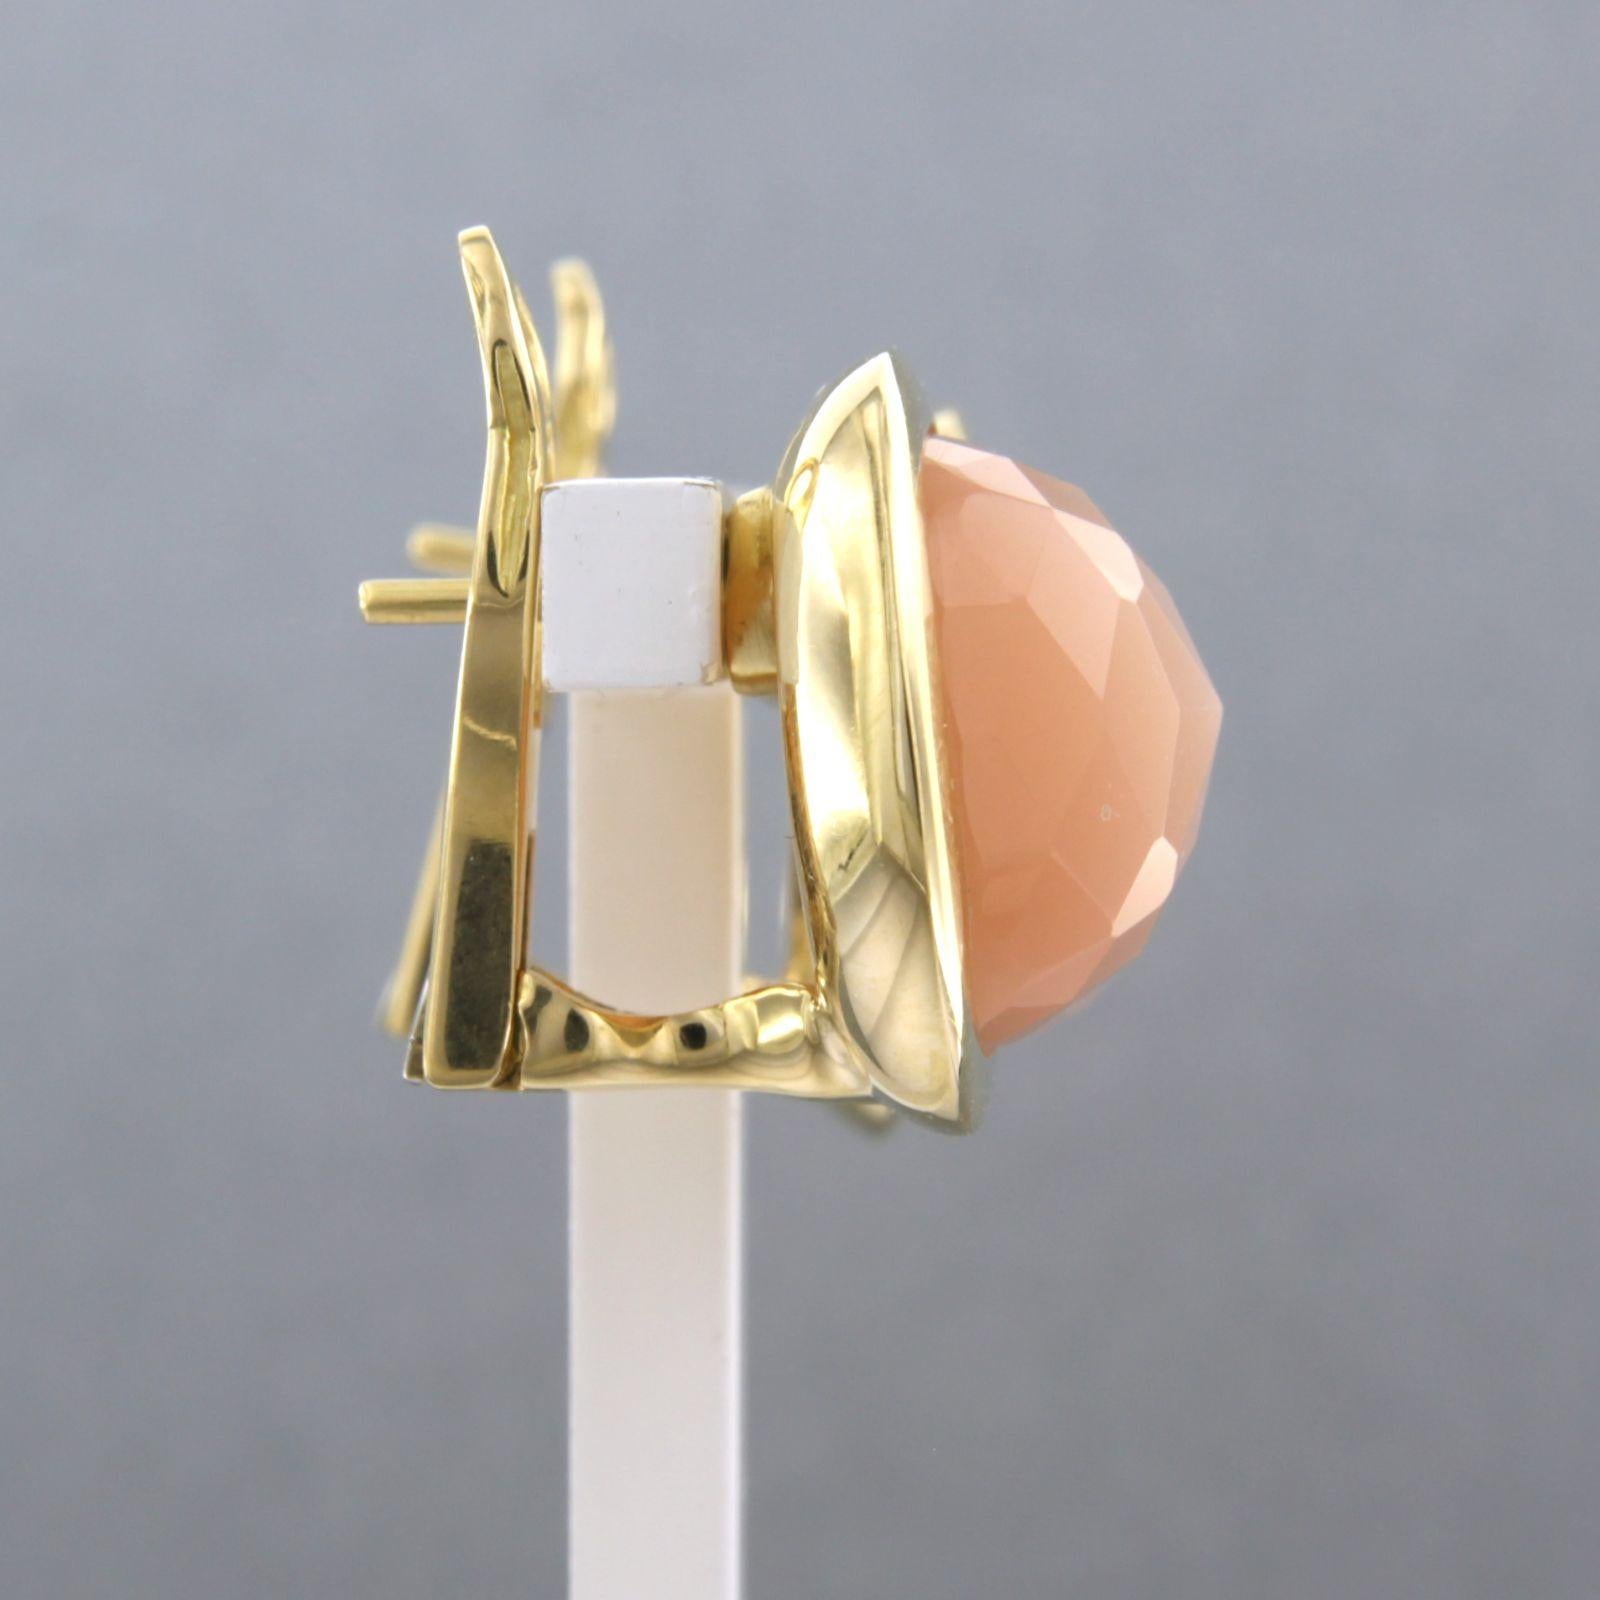 18k yellow gold ear clips set with pink quartz - size 1.8 cm x 1.8 cm For Sale 1